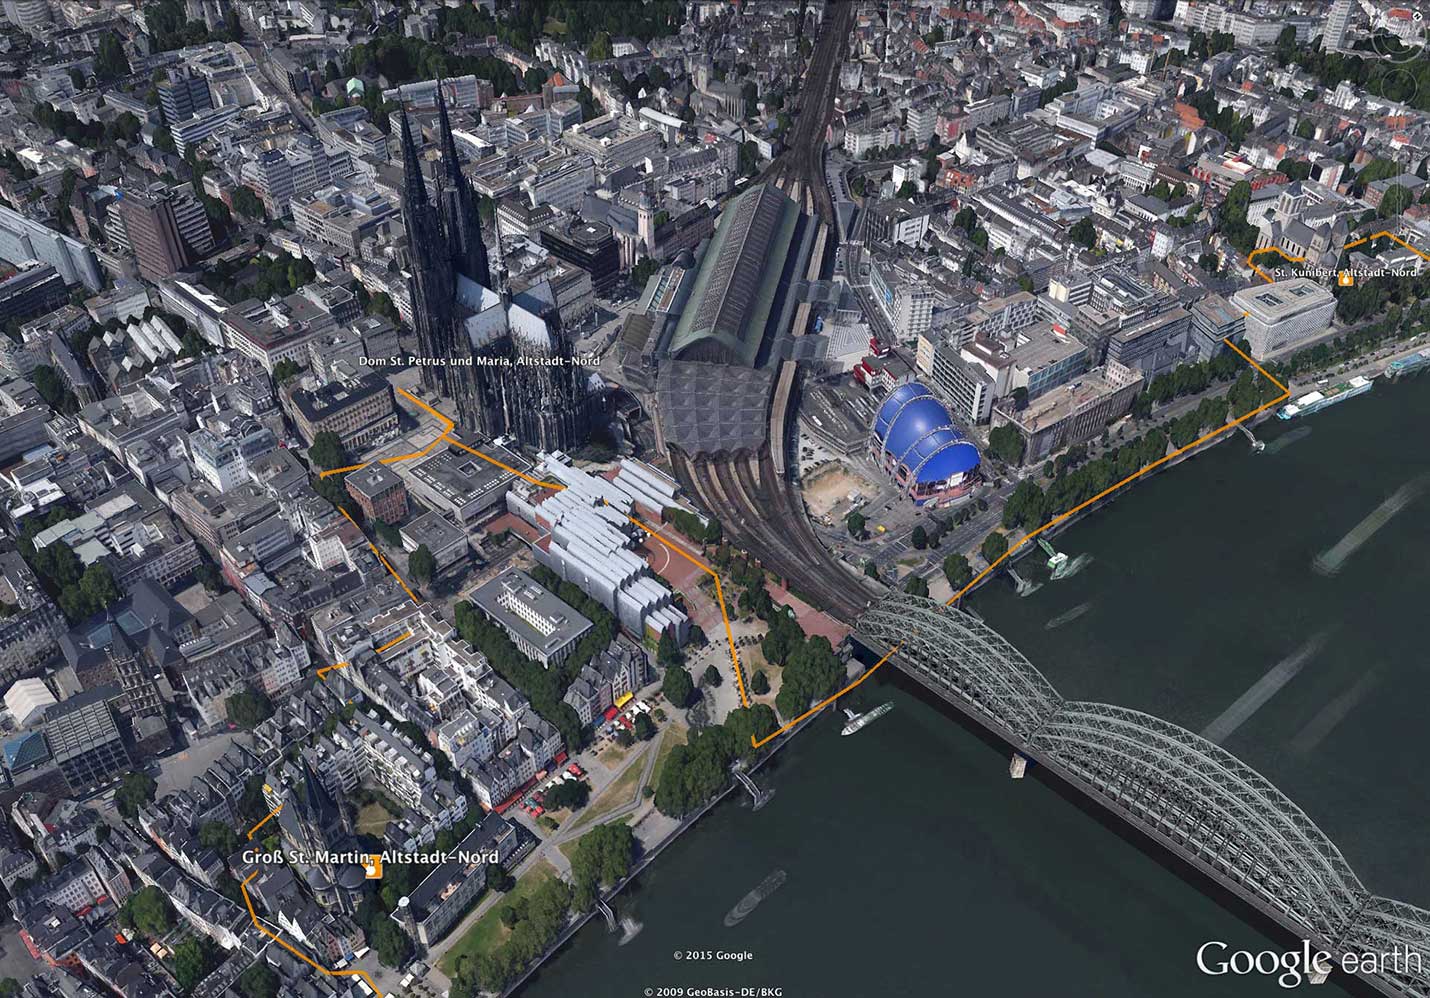 Erzbistum Köln / pfarr-rad > Bike tour exported to Google Earth 3D